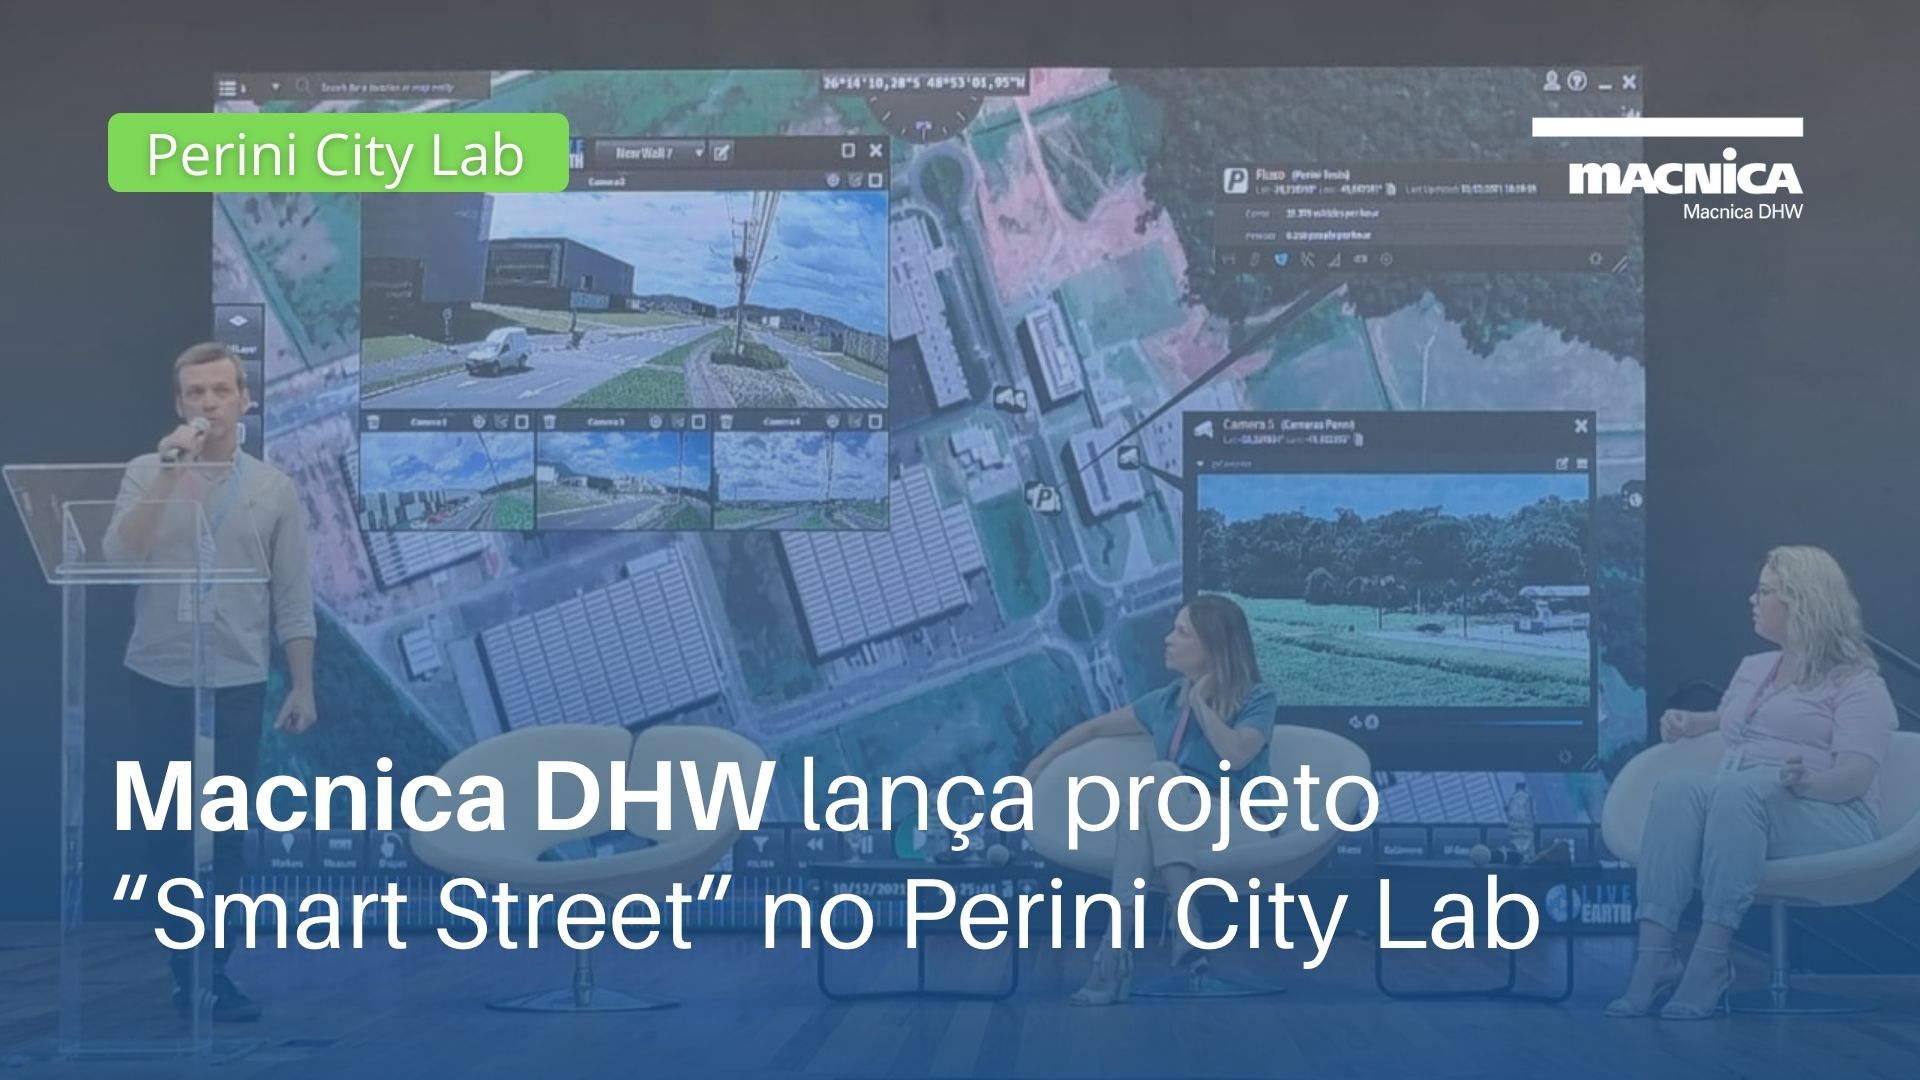 Macnica DHW lança projeto “Smart Street” no Perini City Lab